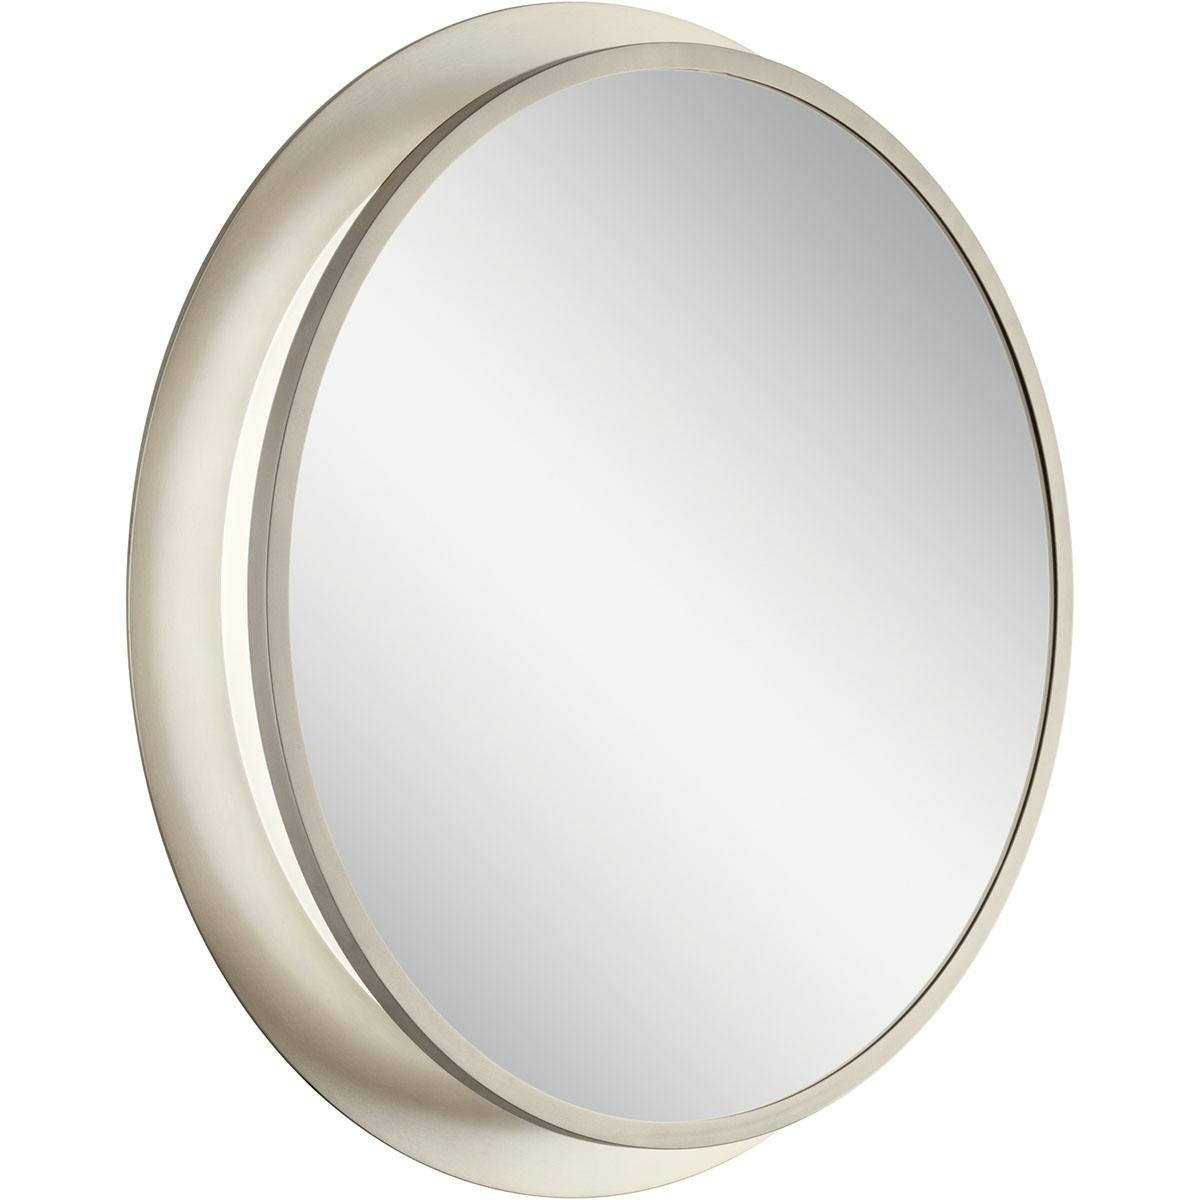 Chennai 30" LED Vanity Mirror Nickel on a white background